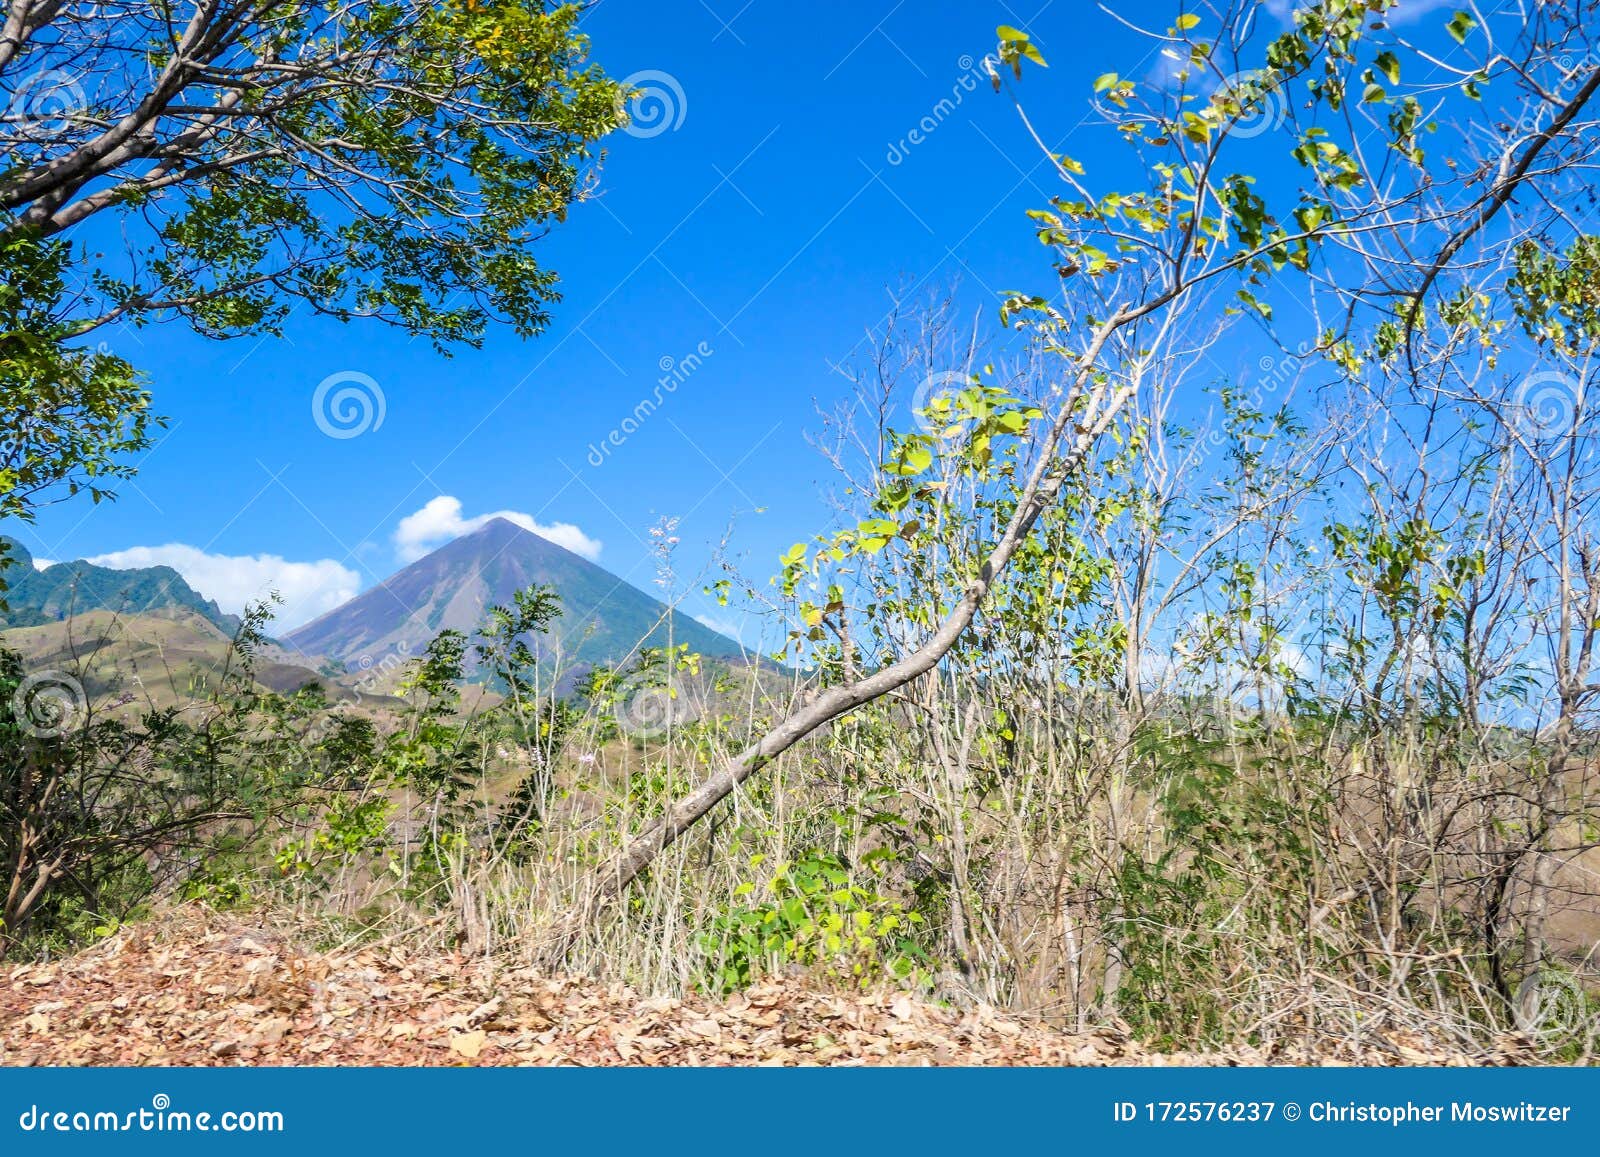 bajawa - distant view on volcano inierie